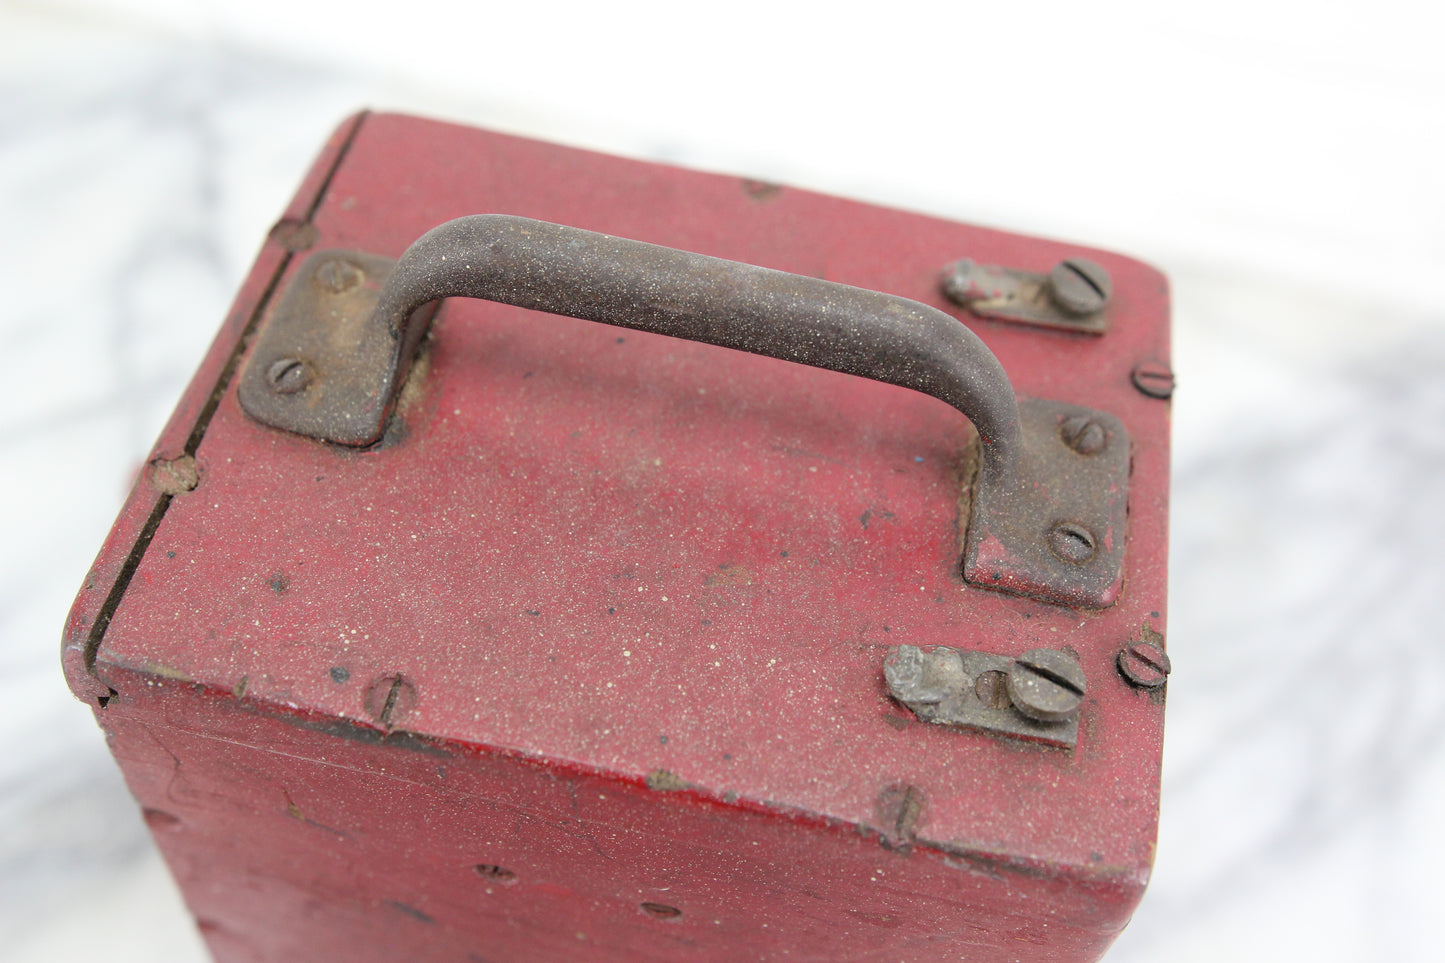 Wooden Hand Crank Mining Dynamite Igniter Detonator Box